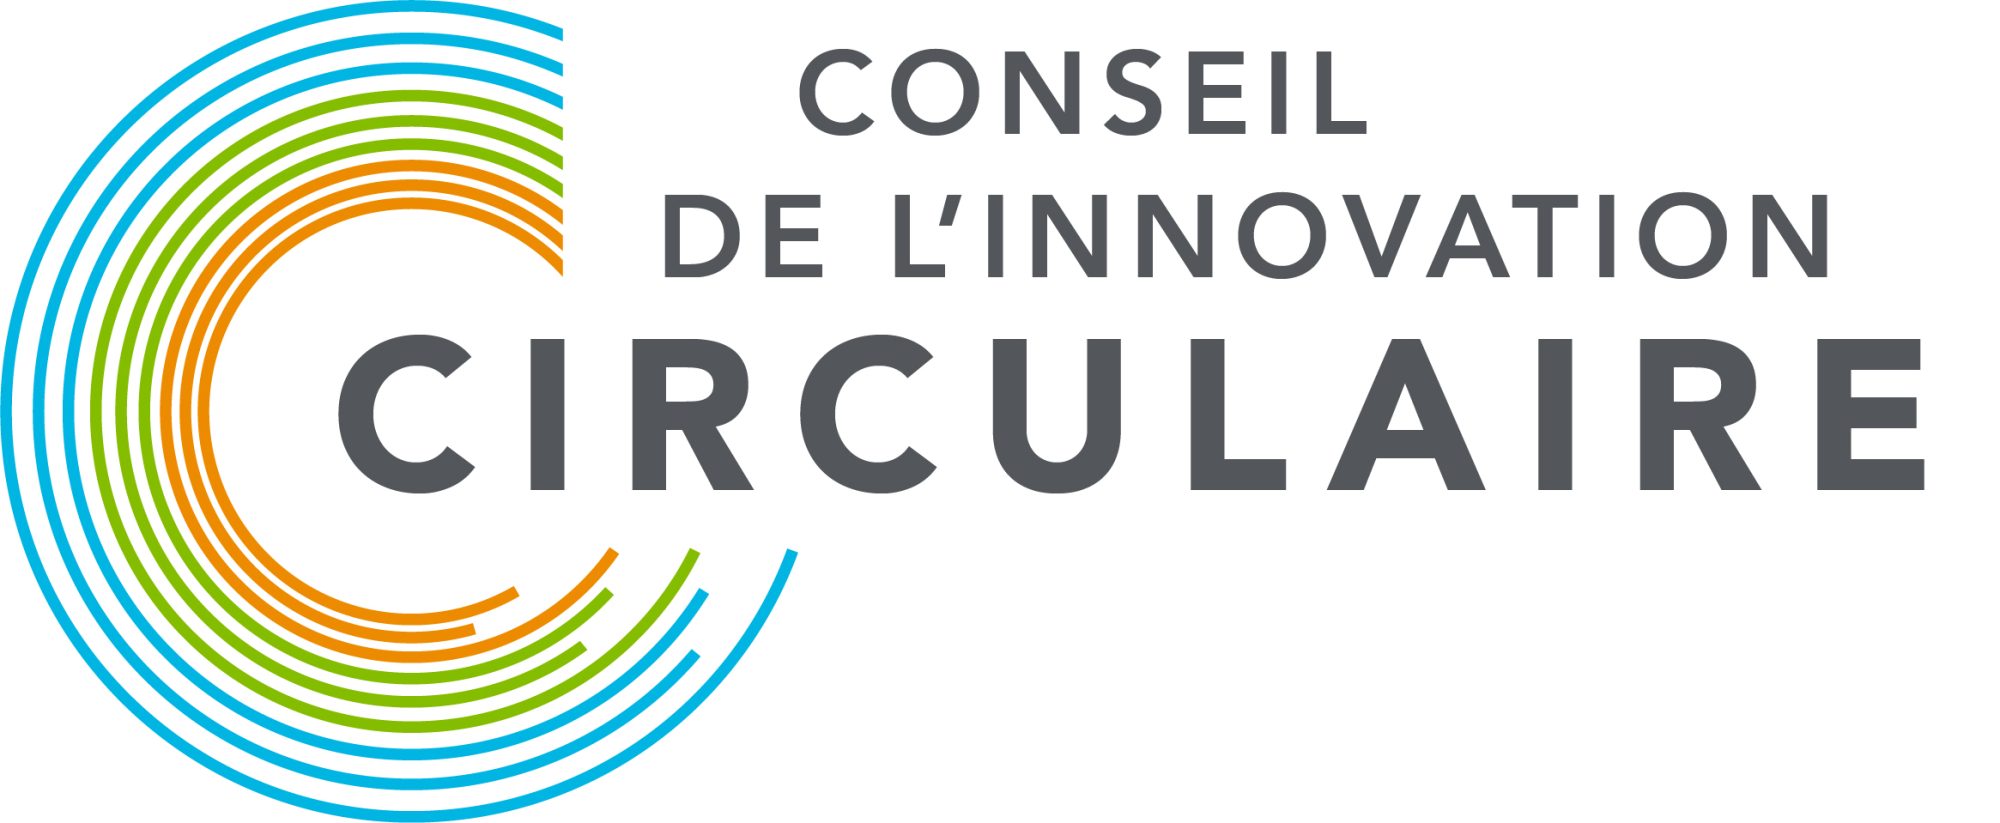 Conseil de l'innovation circulaire